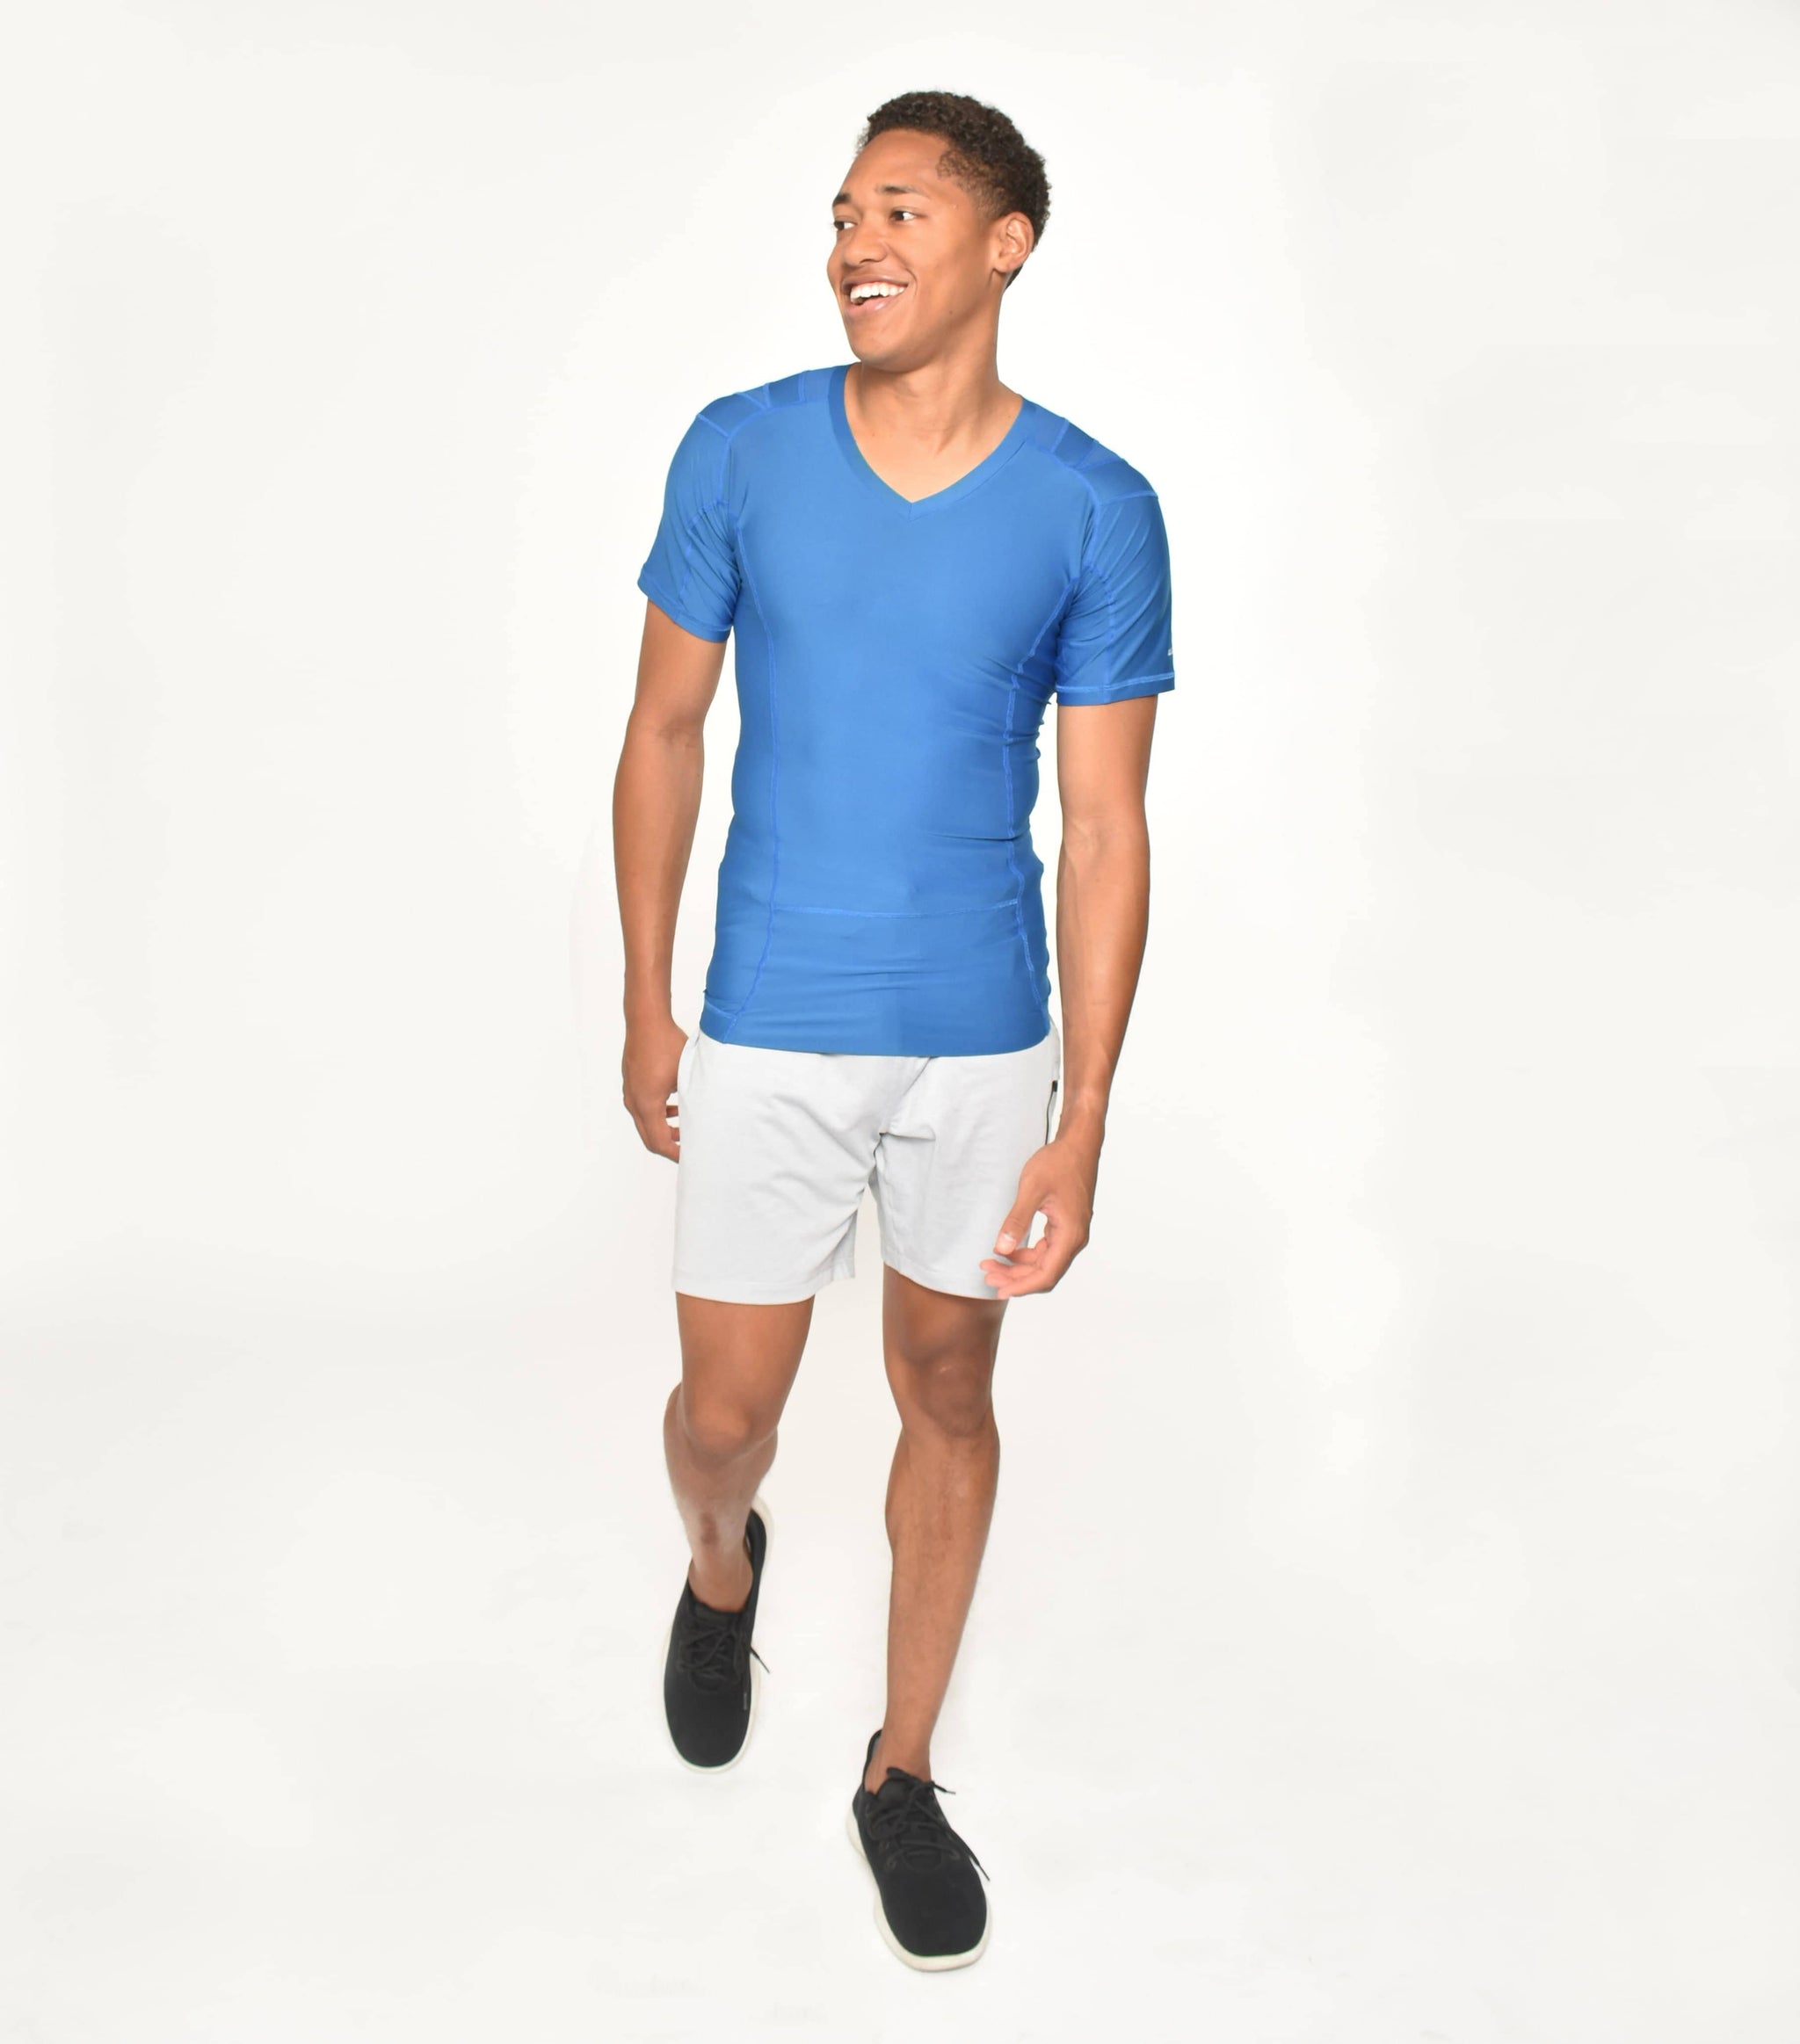 Camiseta Postural Masculina - Posture Shirt® Com Zipper - Alignmed